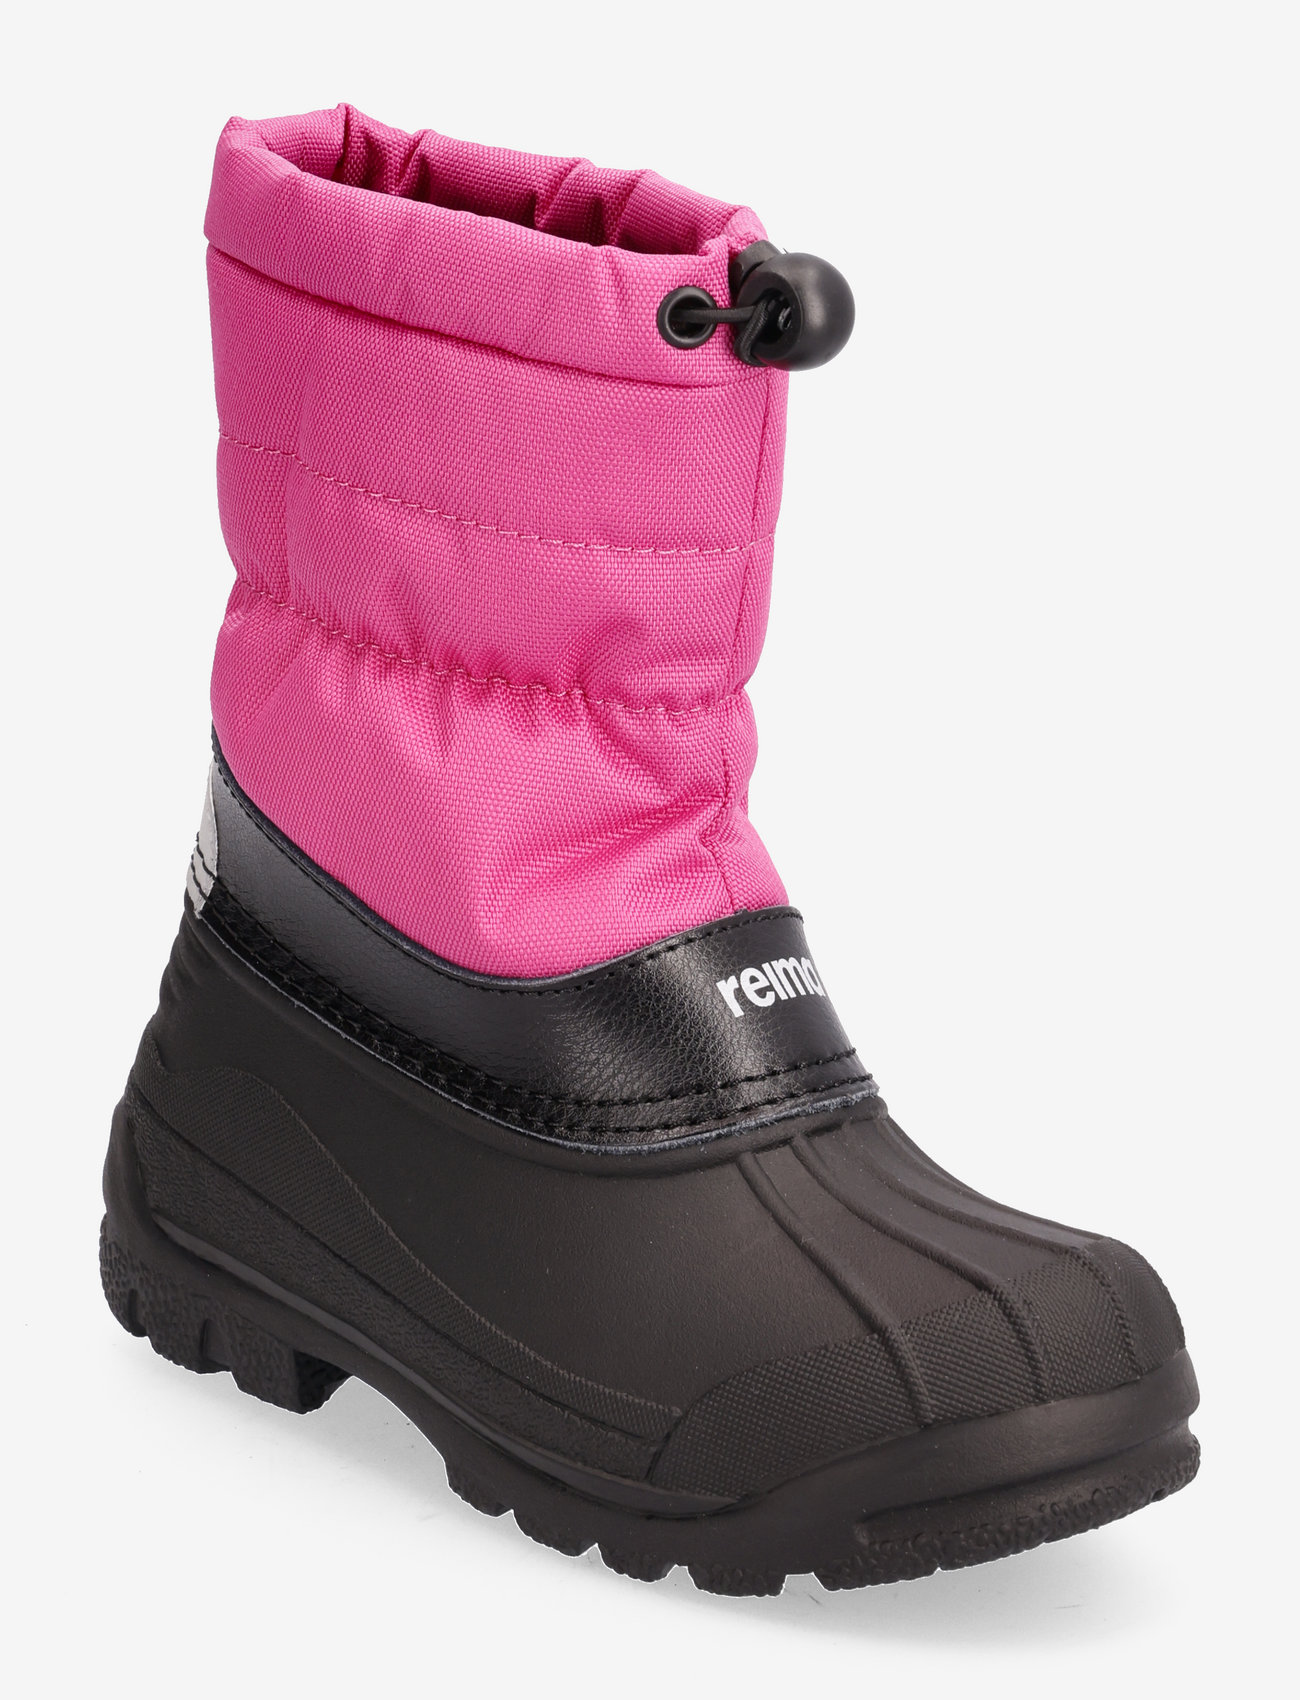 Reima - Winter boots, Nefar - lapset - magenta purple - 0